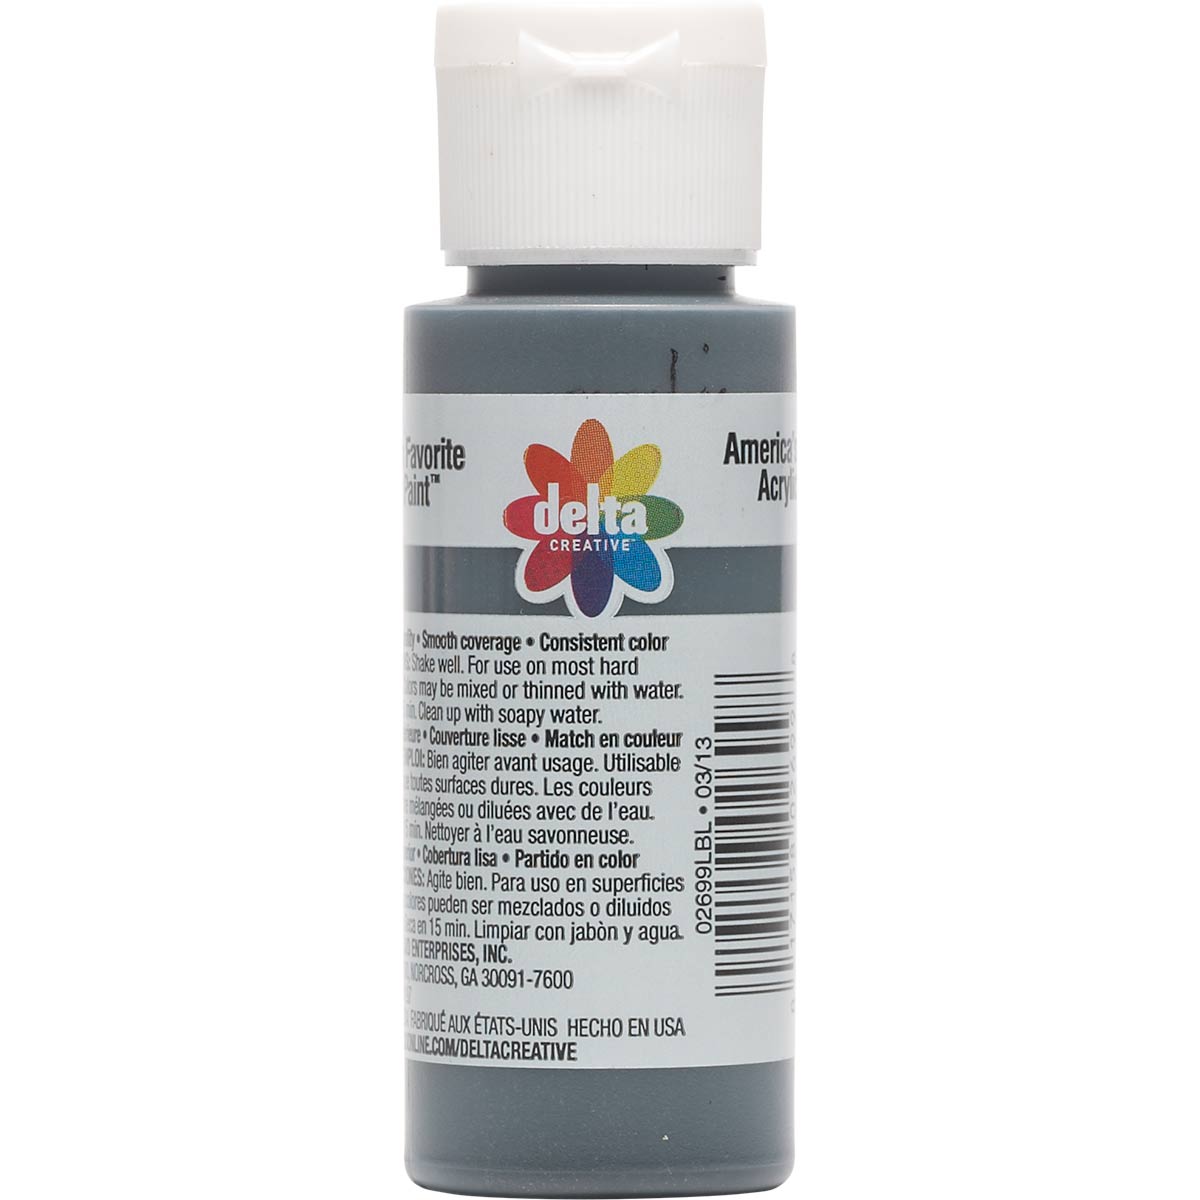 Delta Ceramcoat ® Acrylic Paint - Black Pearl, 2 oz. - 02699